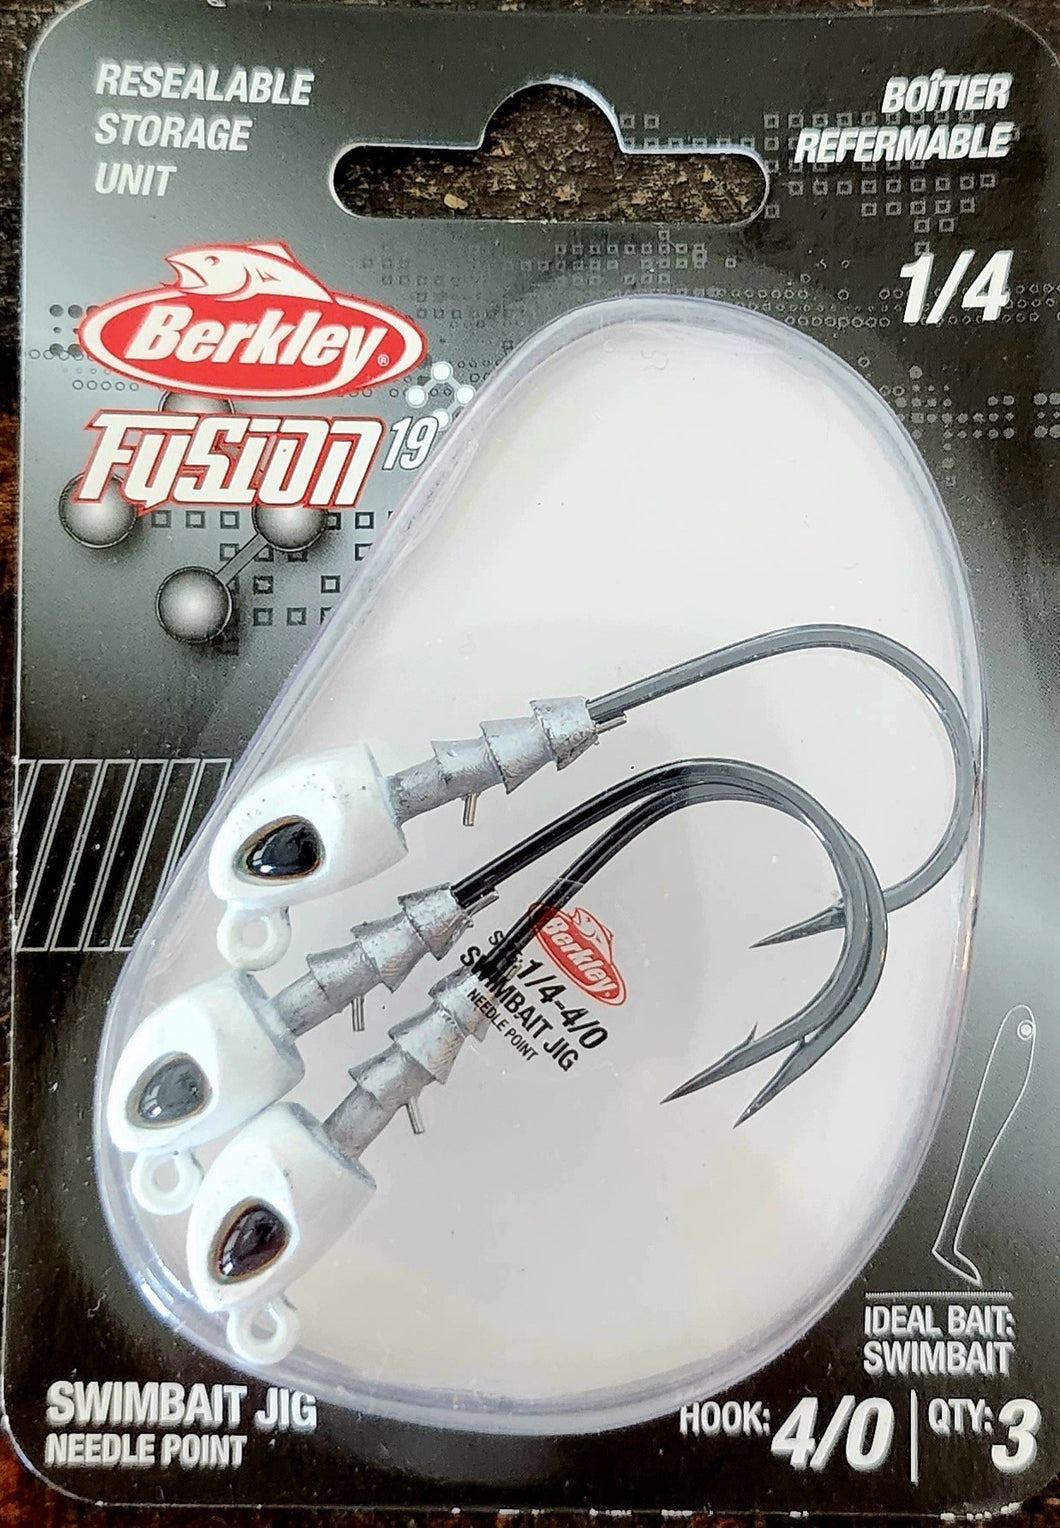 Berkley Fusion 19 1/4 Swimbait jig